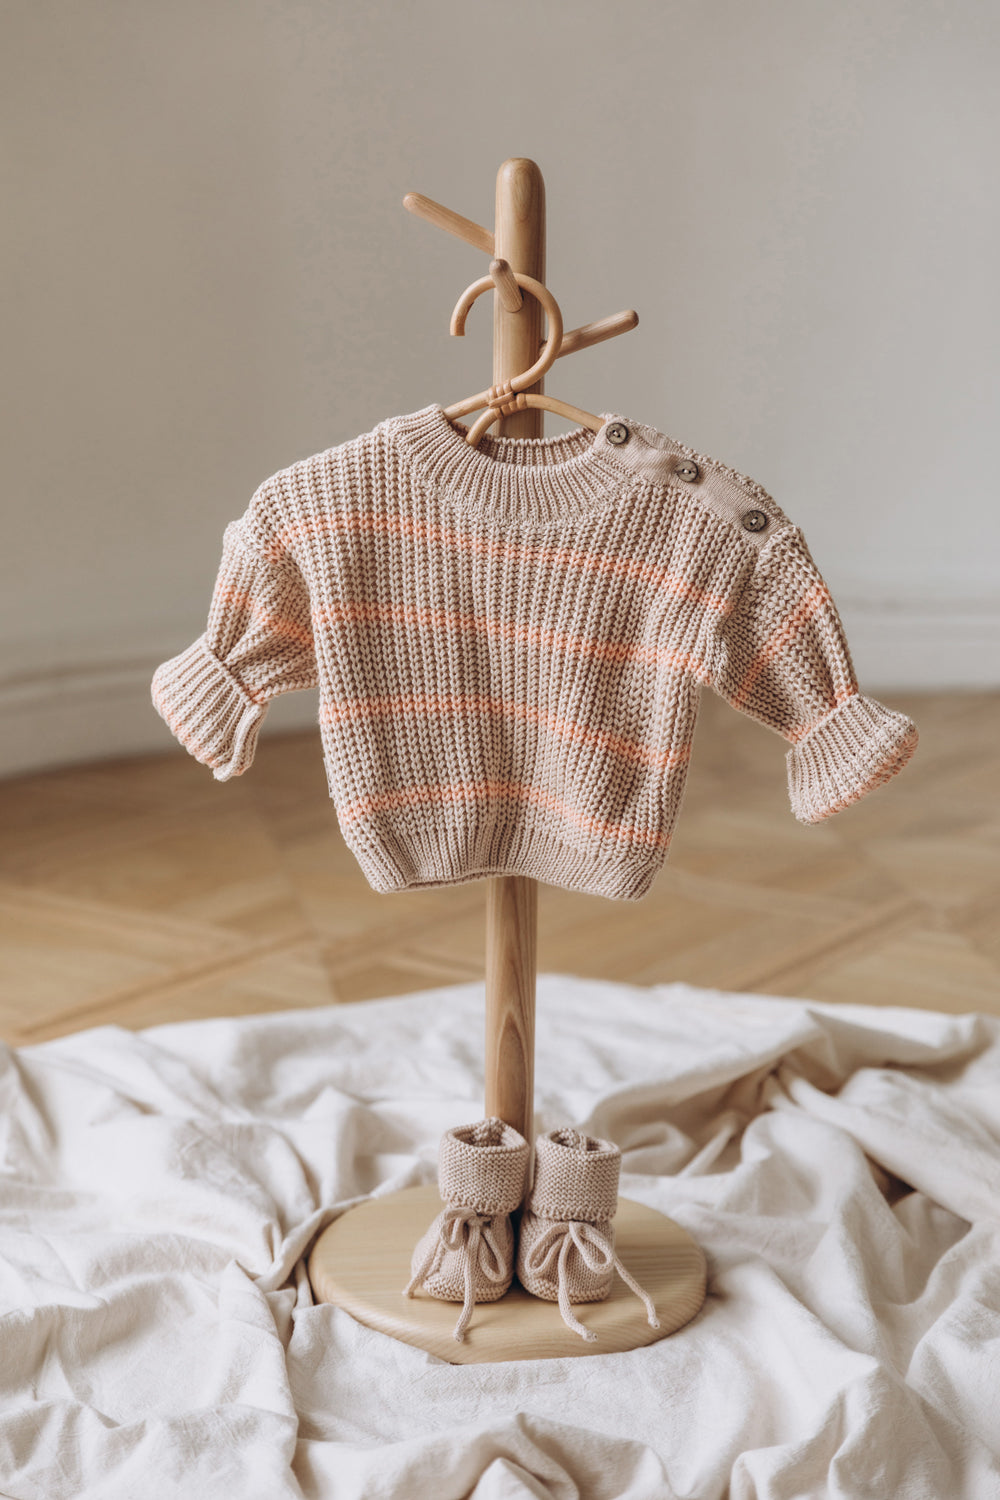 Knit newborn outfit -  chunky oversized sweater, newborn coming home outfit -baby knit sweater 0-3 months, newborn outfit bringing home,  my first outfit